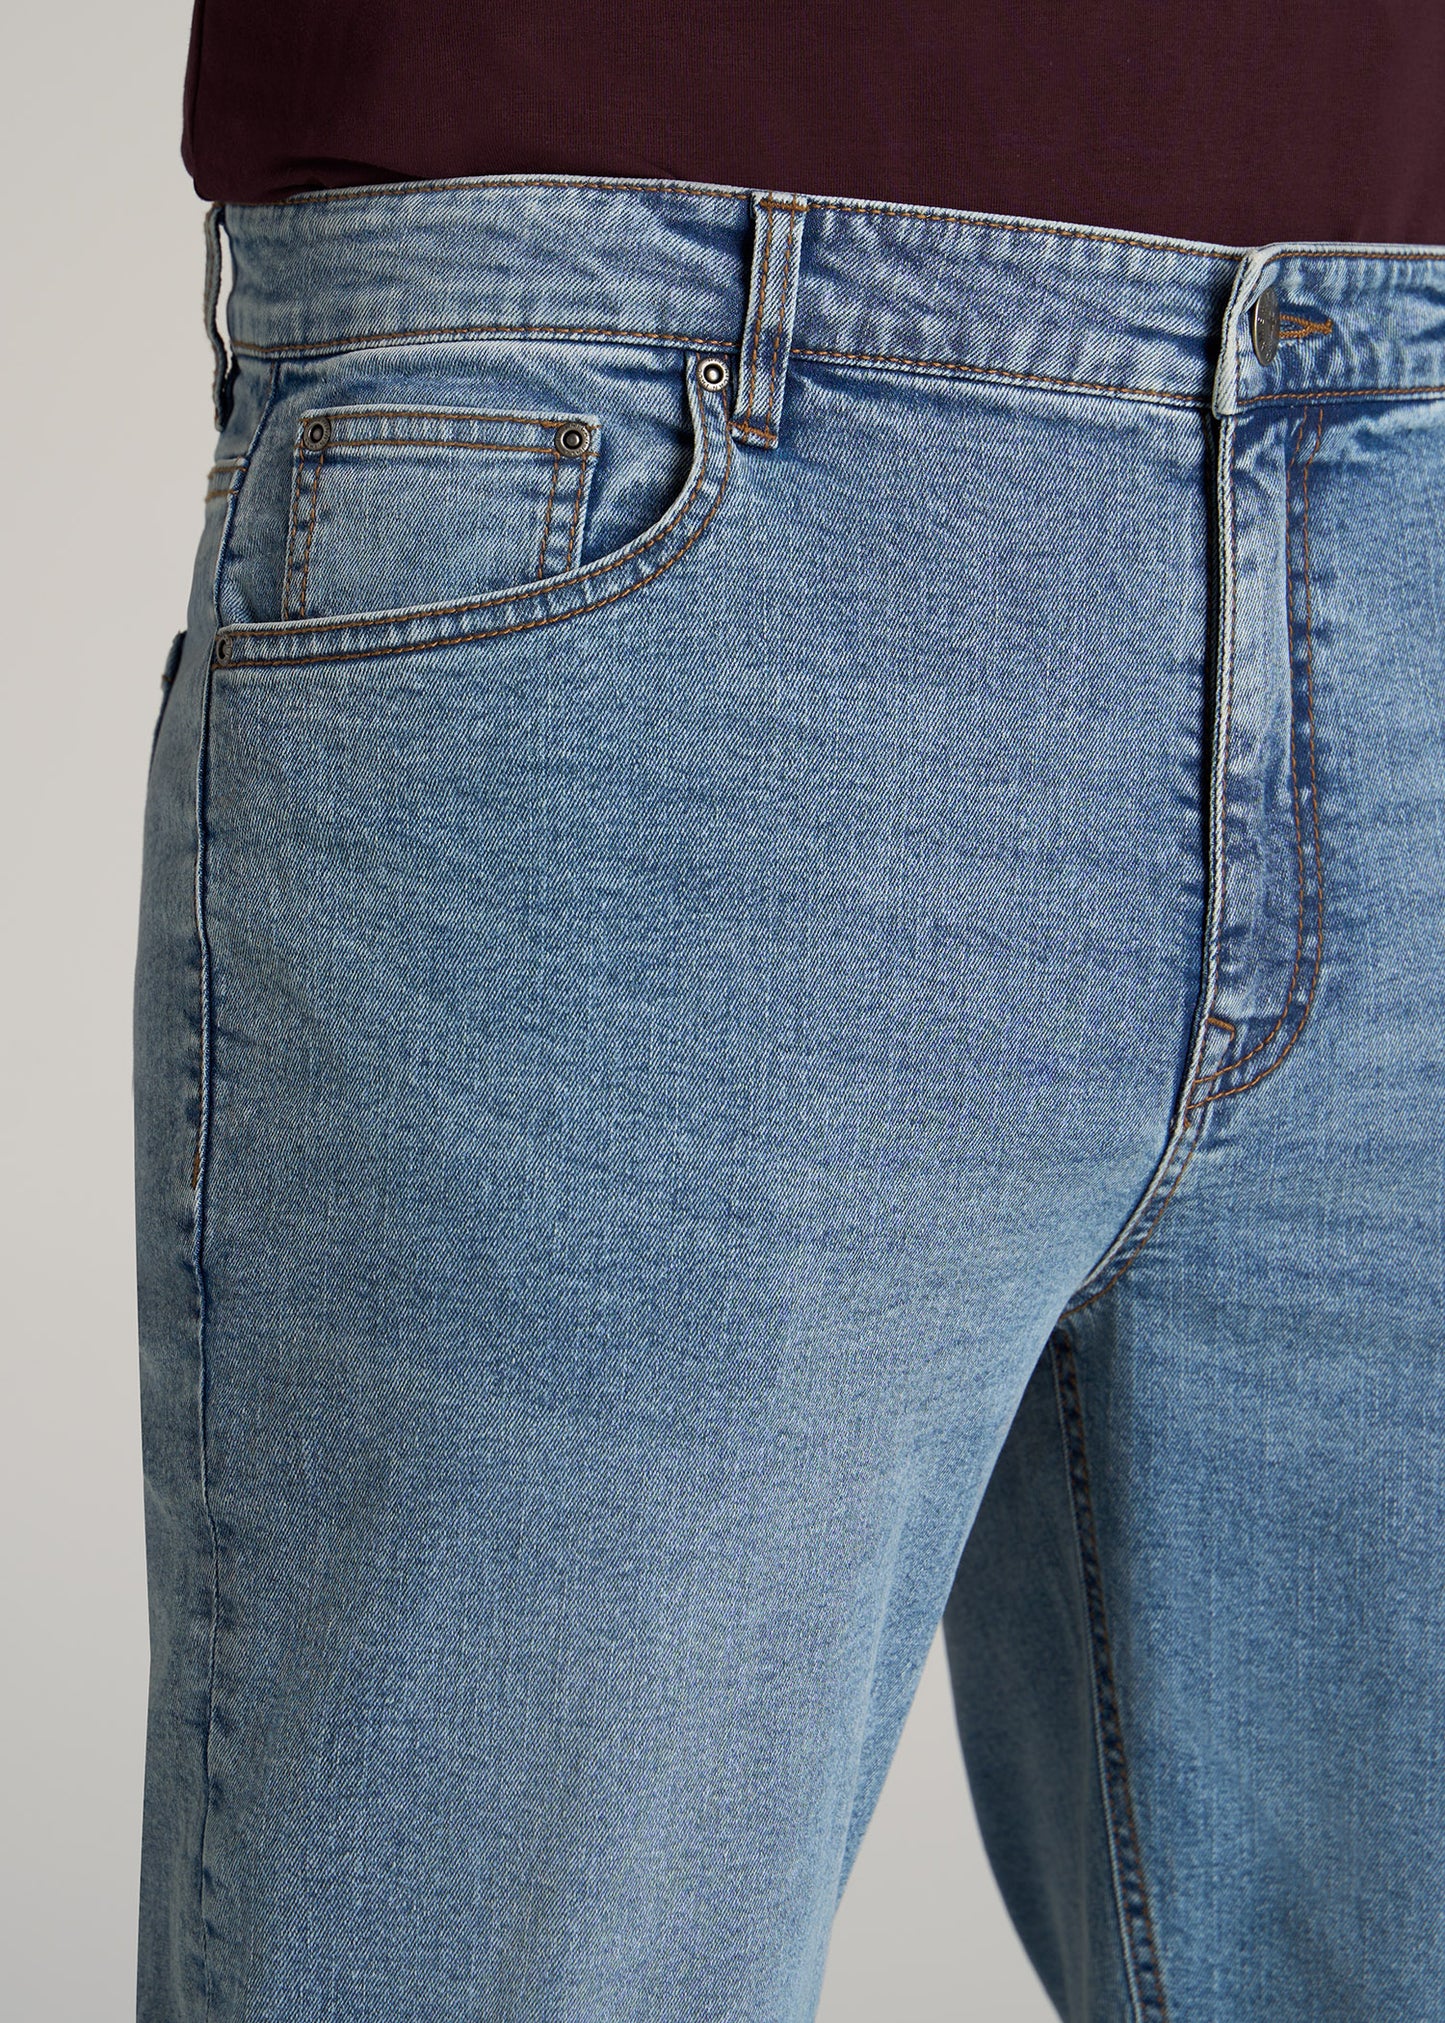         American-Tall-Men-J1-Jeans-Faded-Blue-pocket